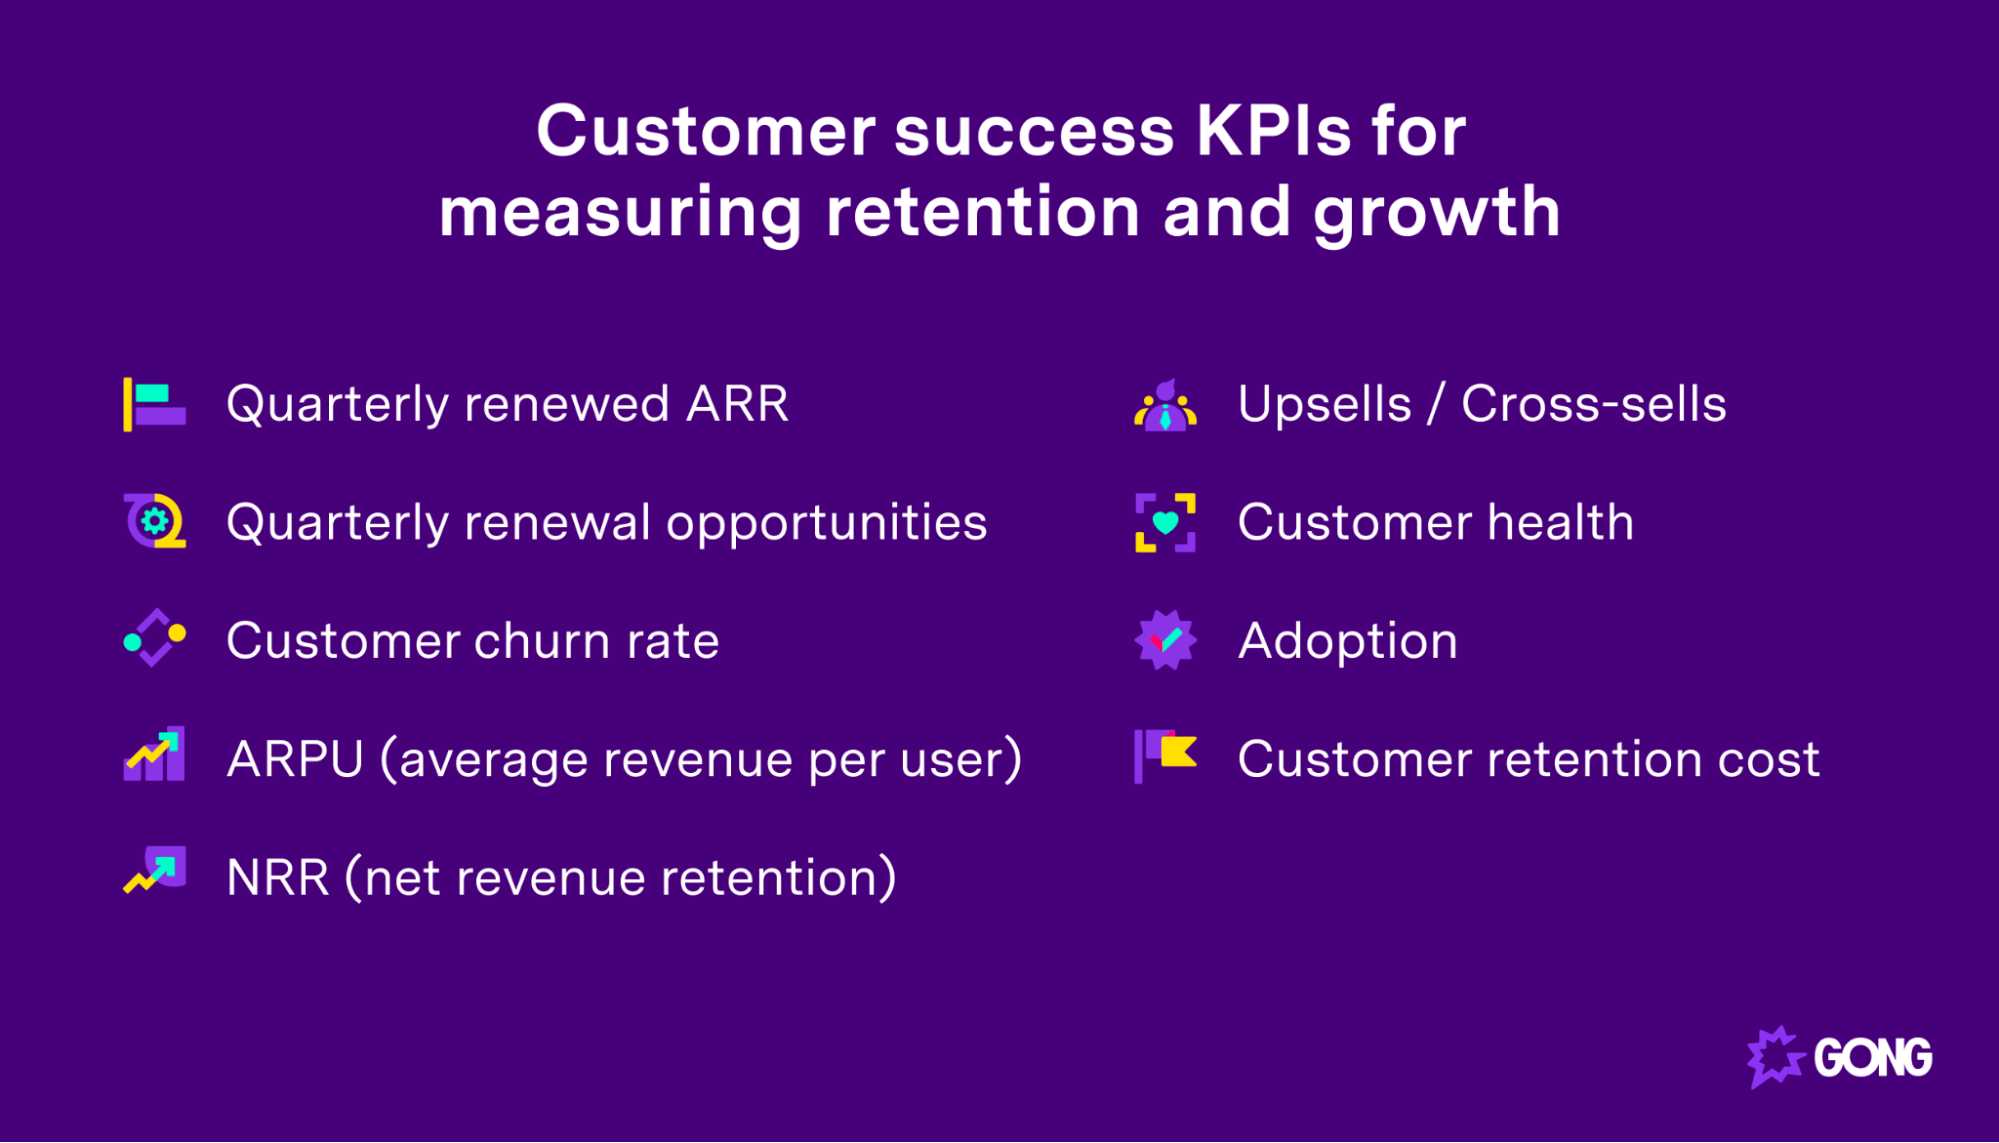 Examples of customer success KPIs